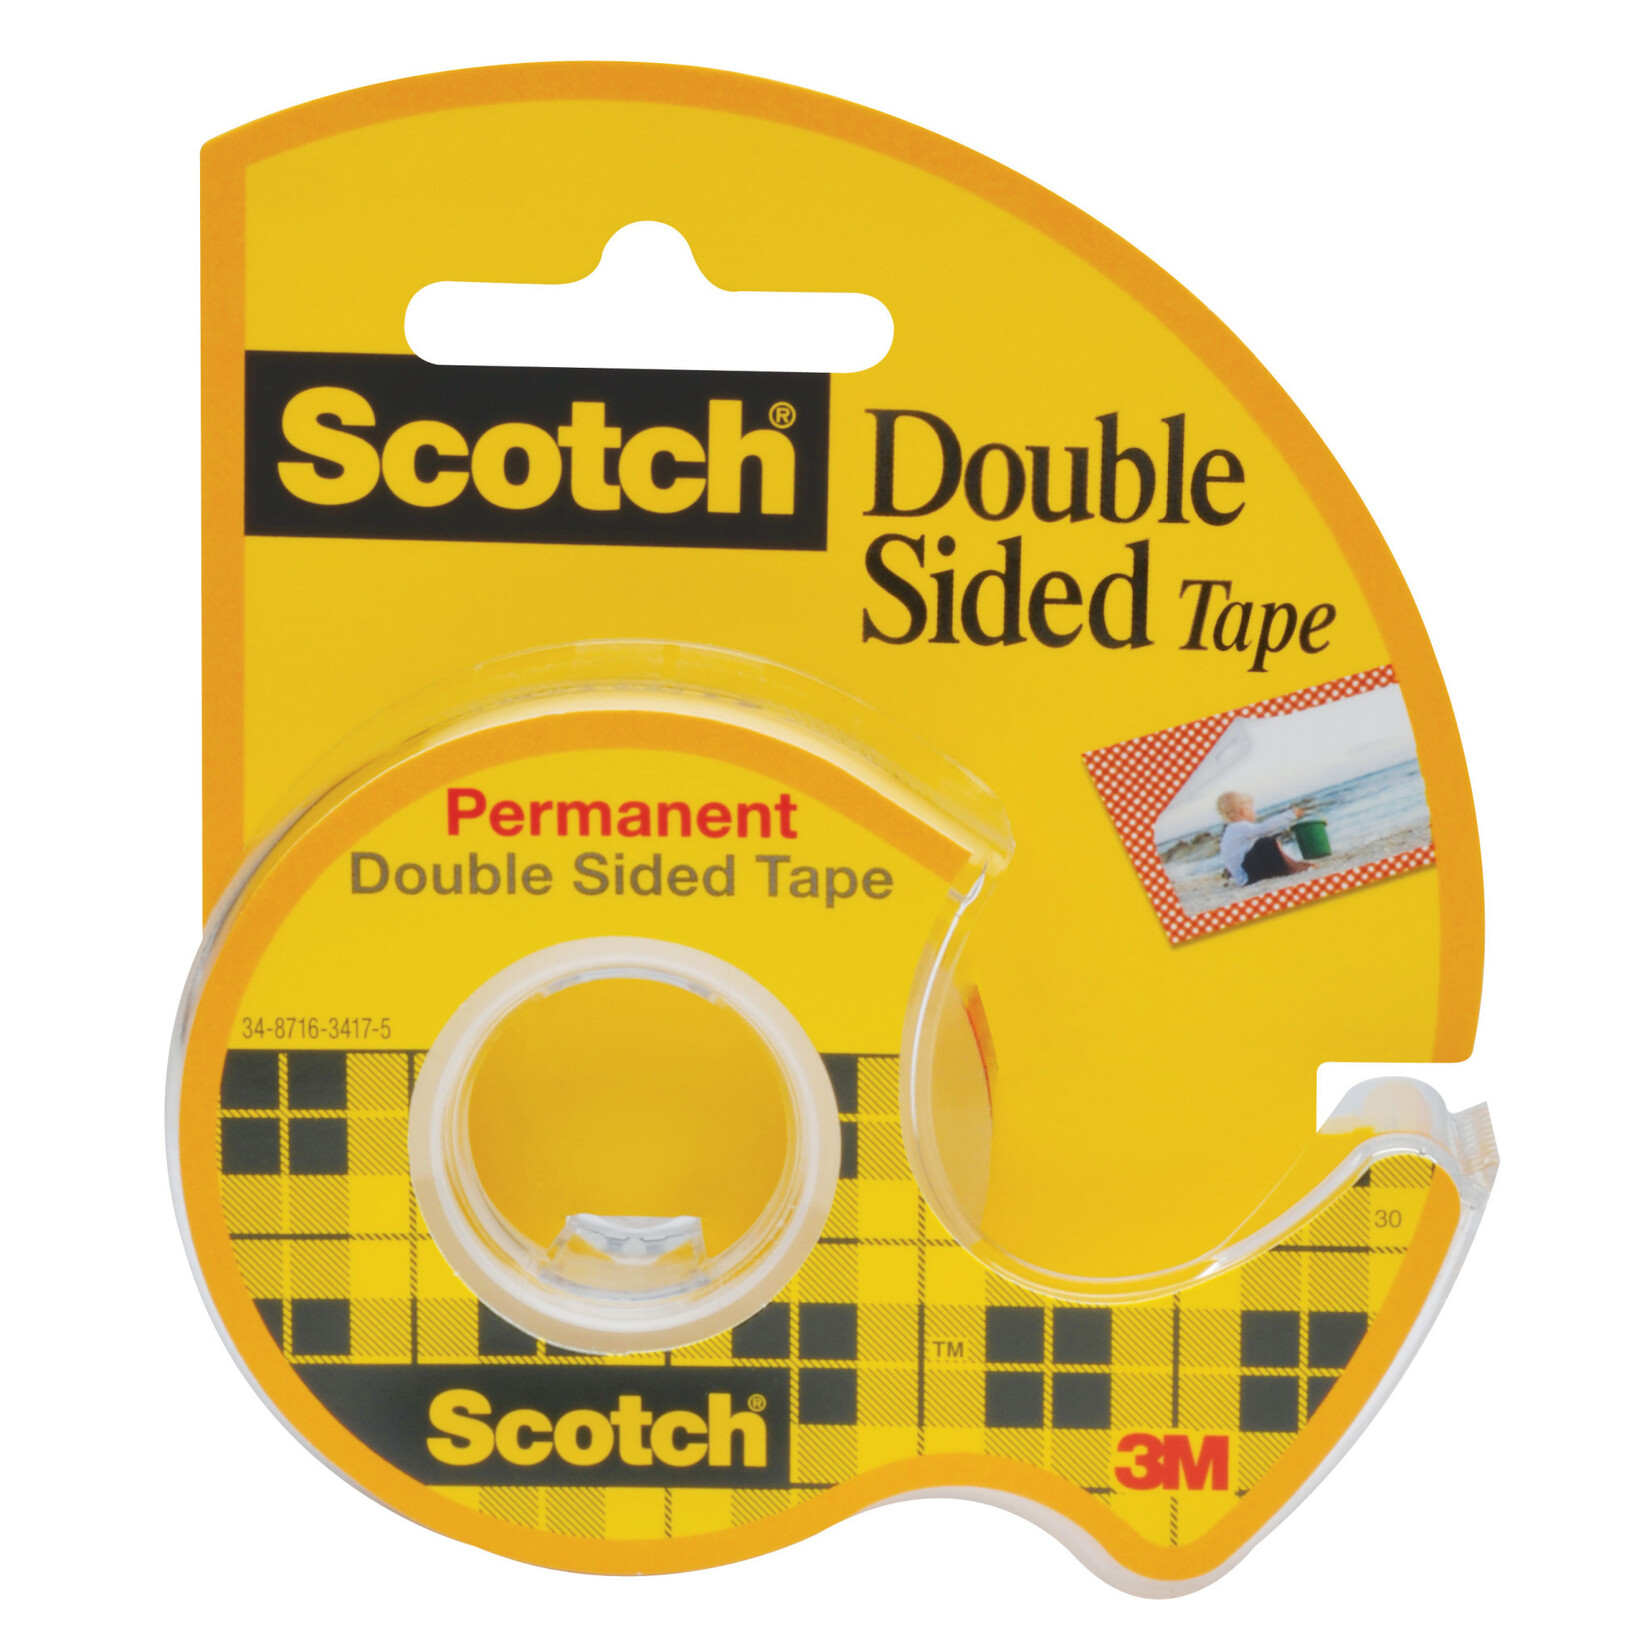 Scotch 3m Scotch Double Sided Tape, 1/2" x 250" Dispenser Roll